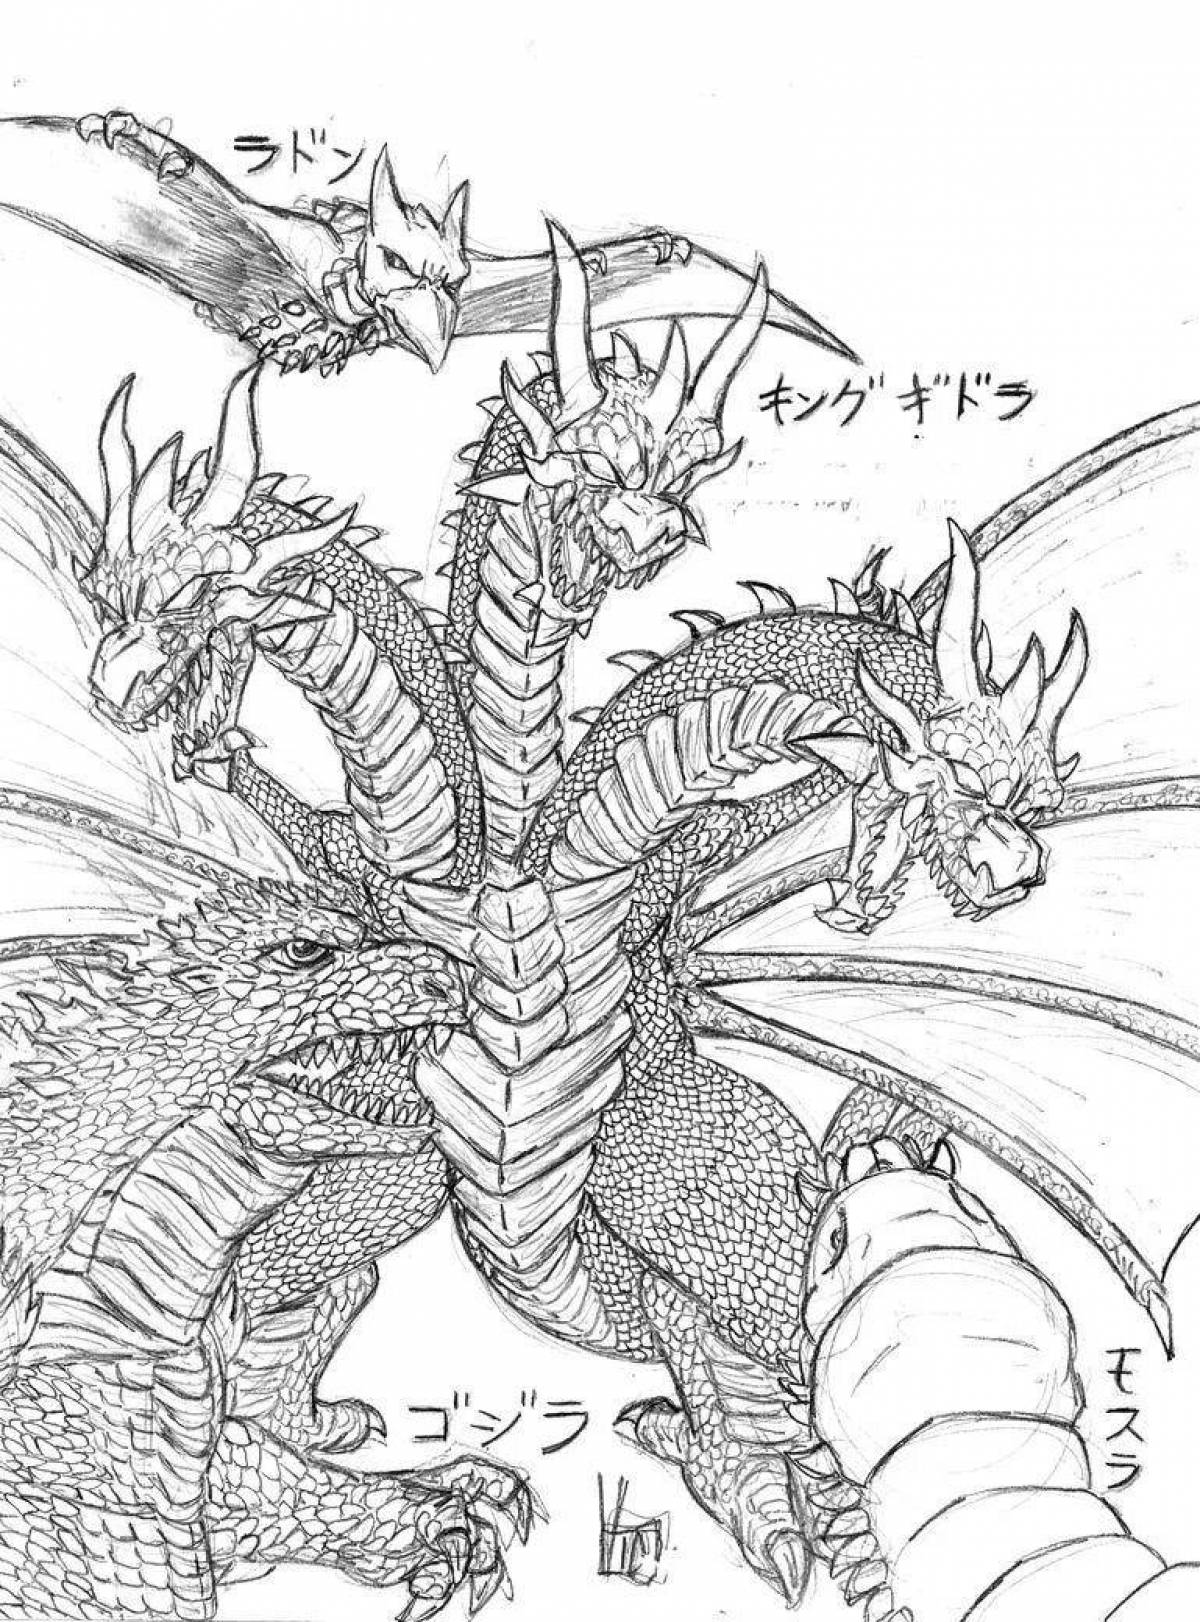 Impressive Godzilla and Kingidora coloring book